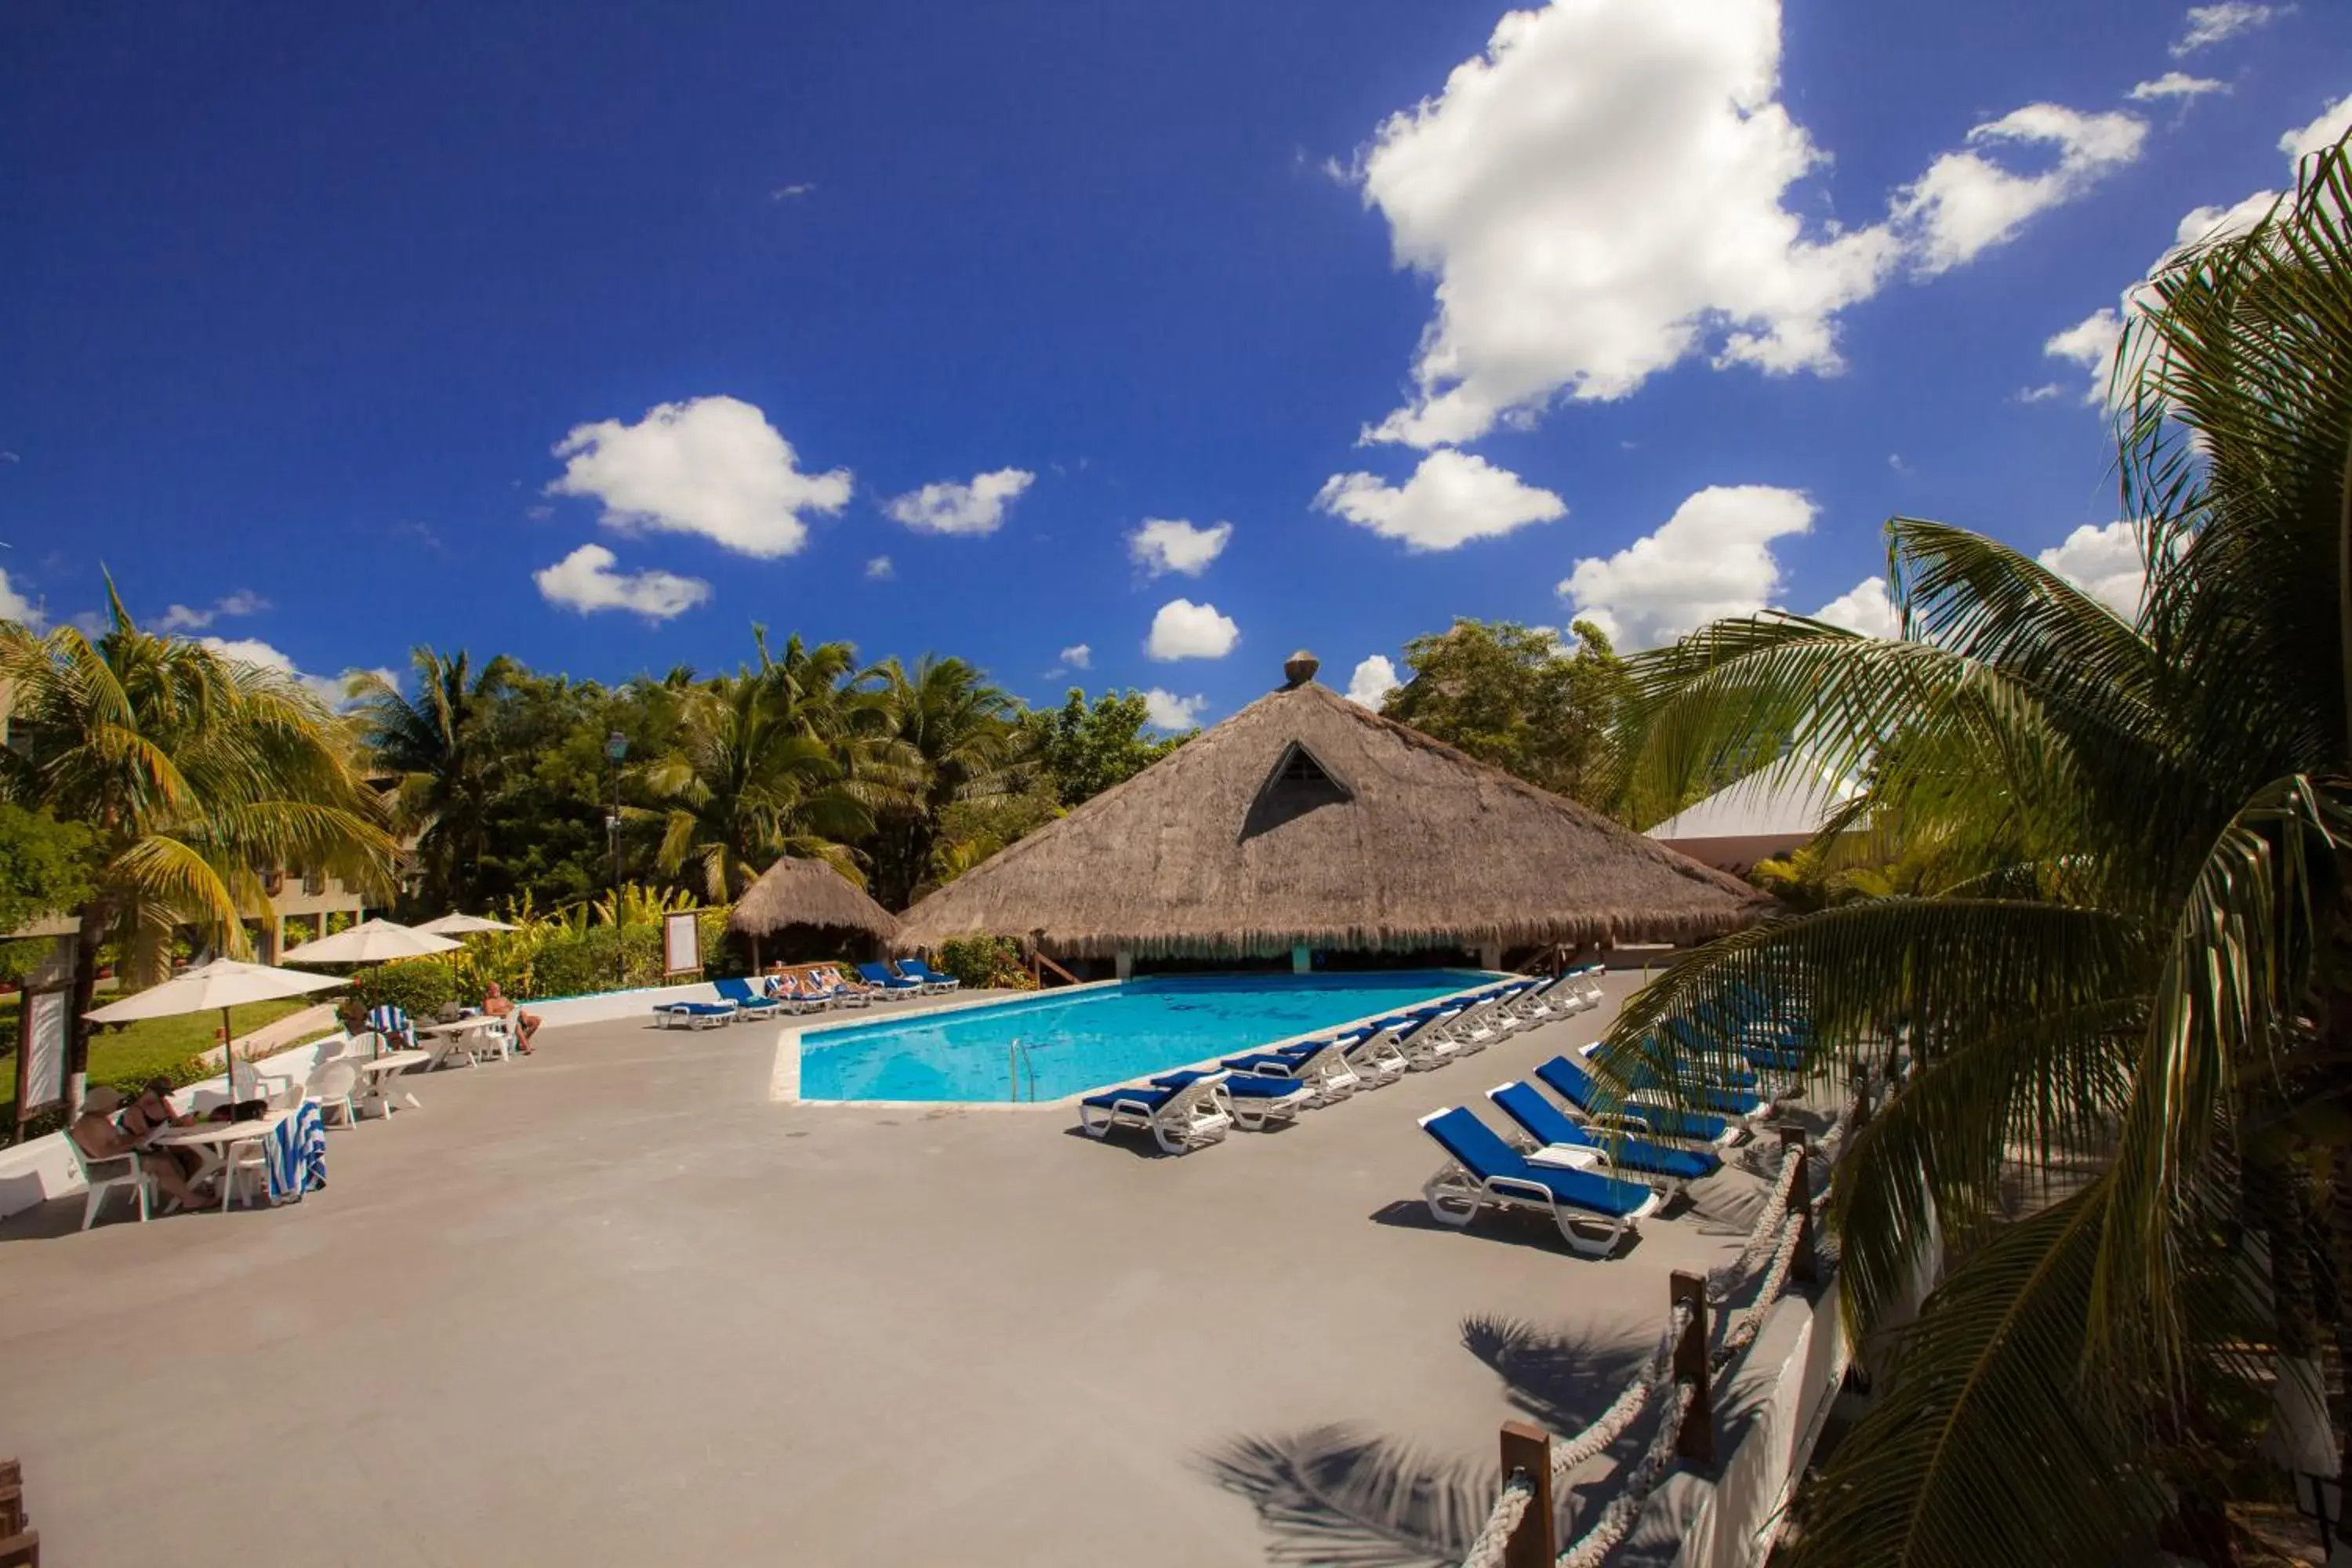 Swimming Pool in Casa del Mar Cozumel Hotel & Dive Resort